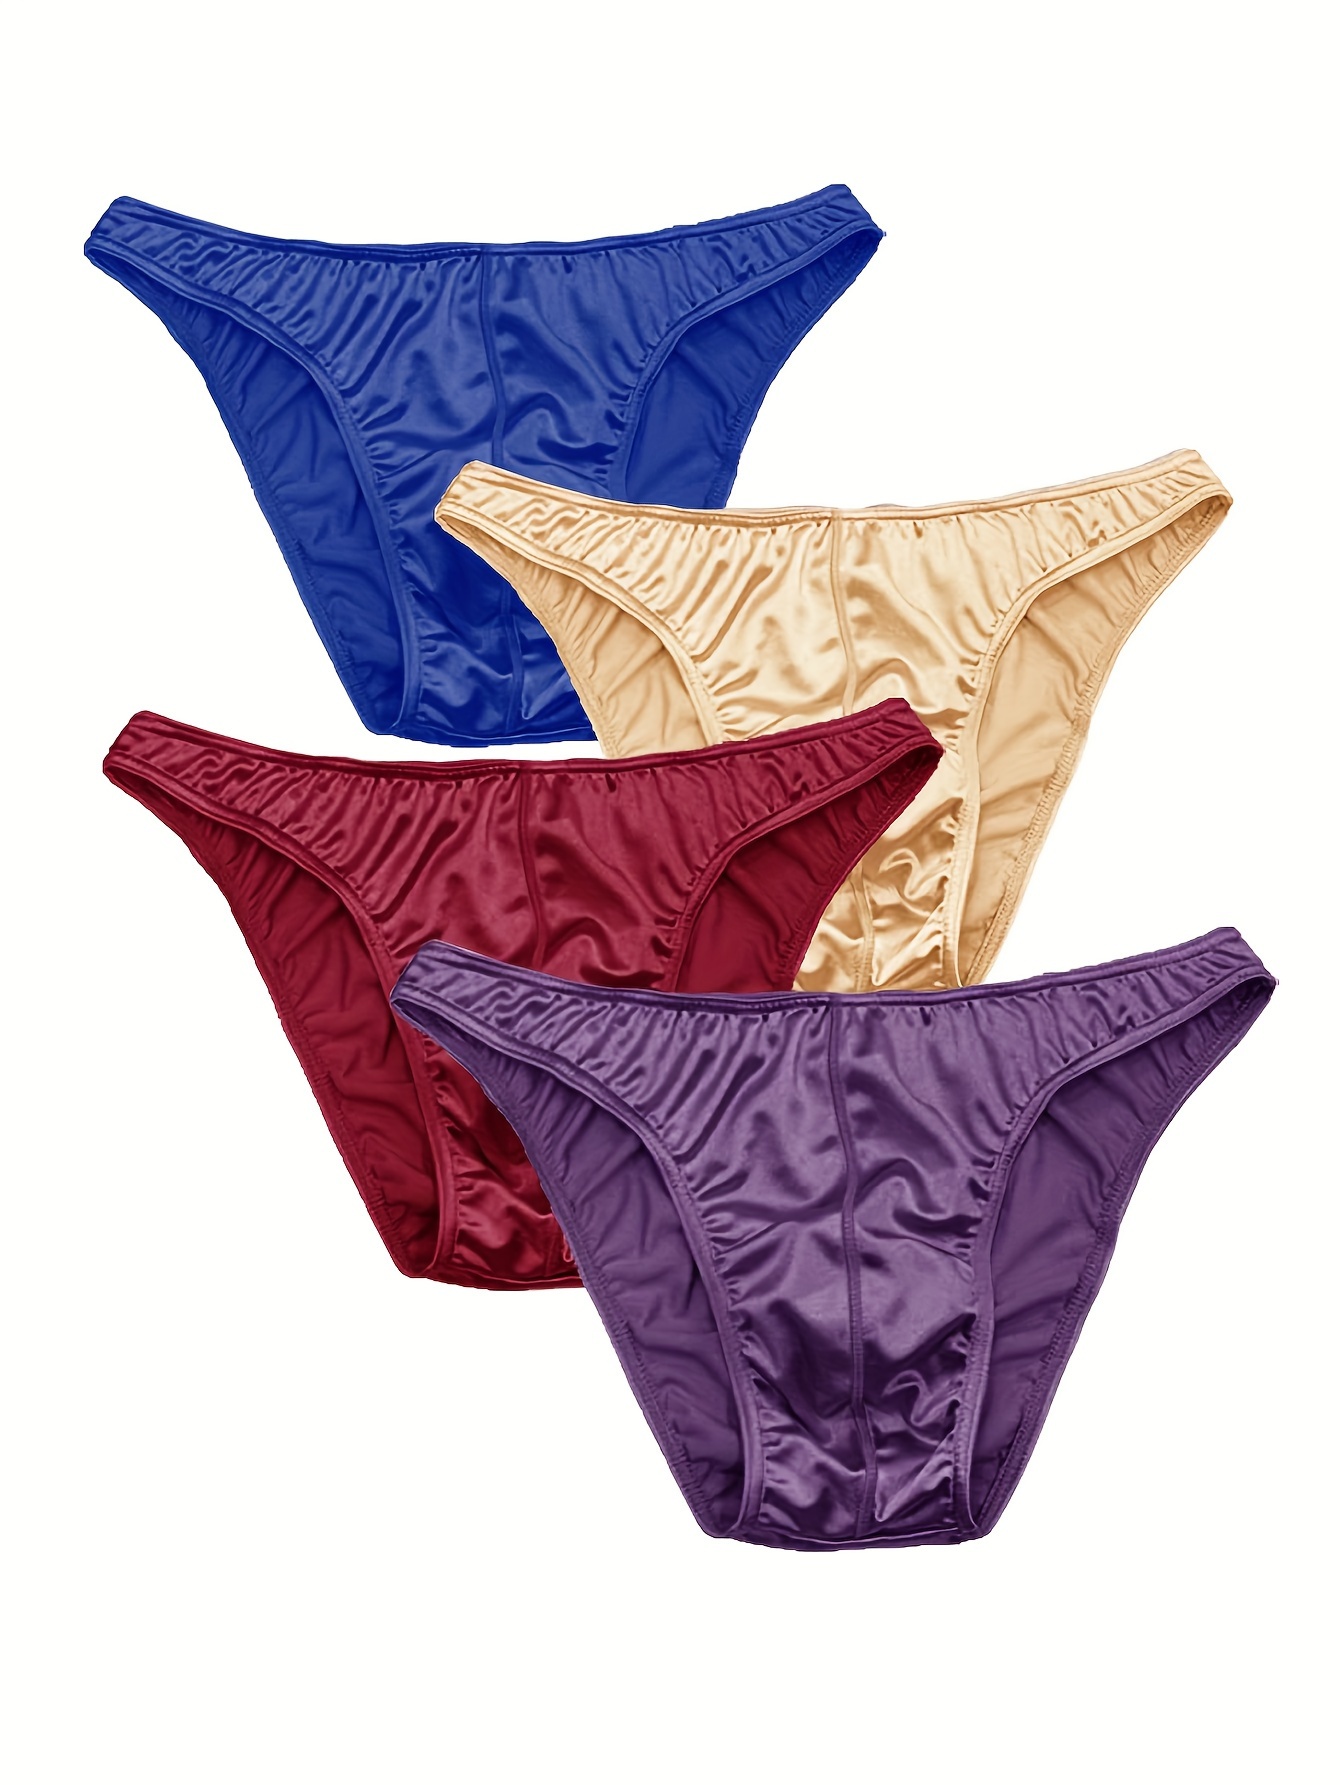 Comfy Fashion Mens Panites Underwear Solid Color Underpants All